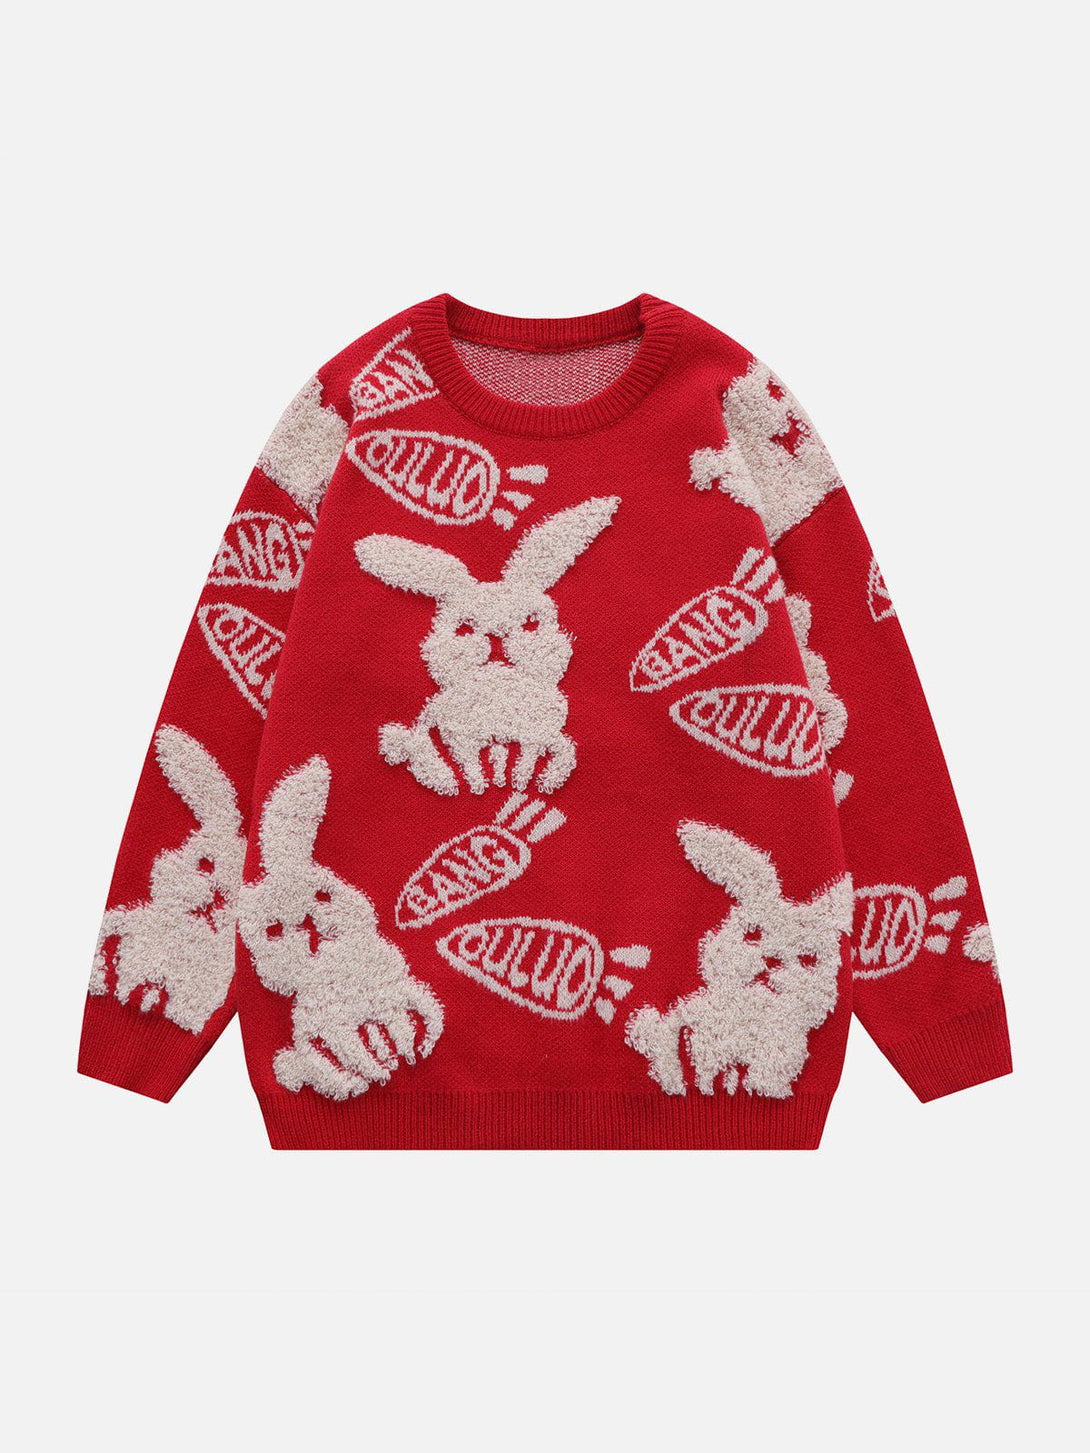 Majesda® - Flocking Rabbit Knit Sweater outfit ideas streetwear fashion